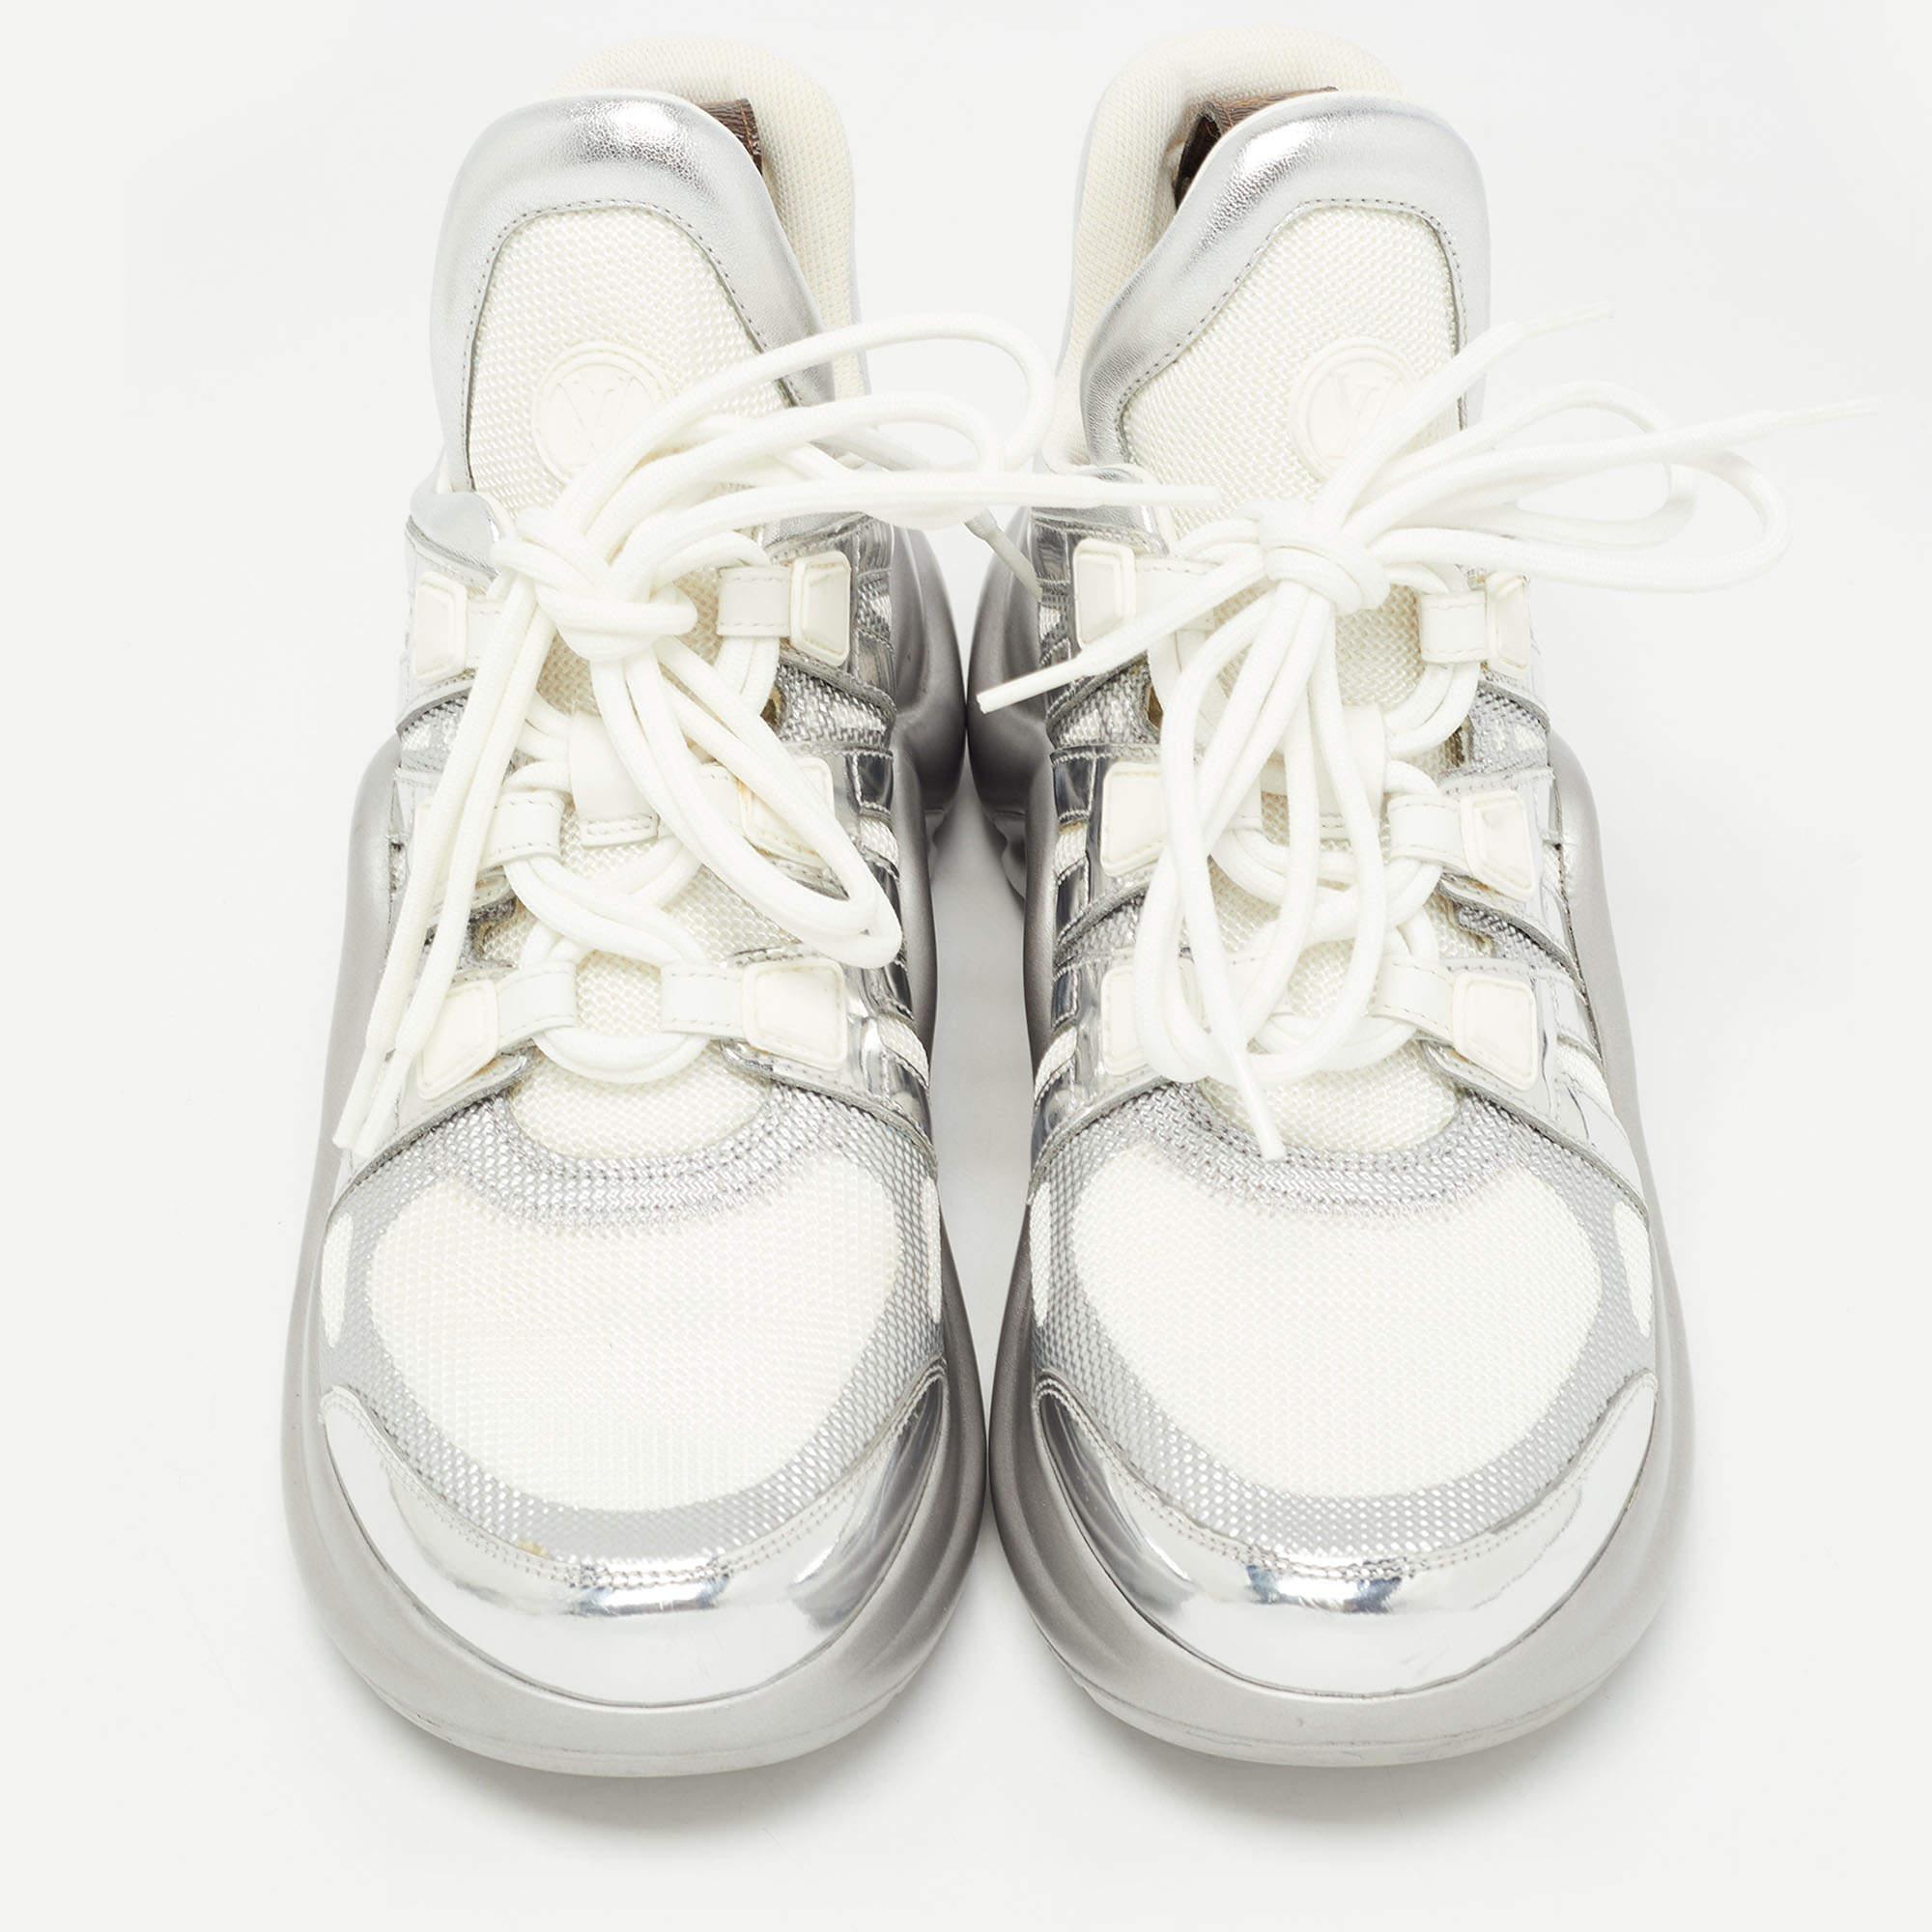 Louis Vuitton, Shoes, Louis Vuitton Limited Edition Archlight Metallic Silver  Sneakers